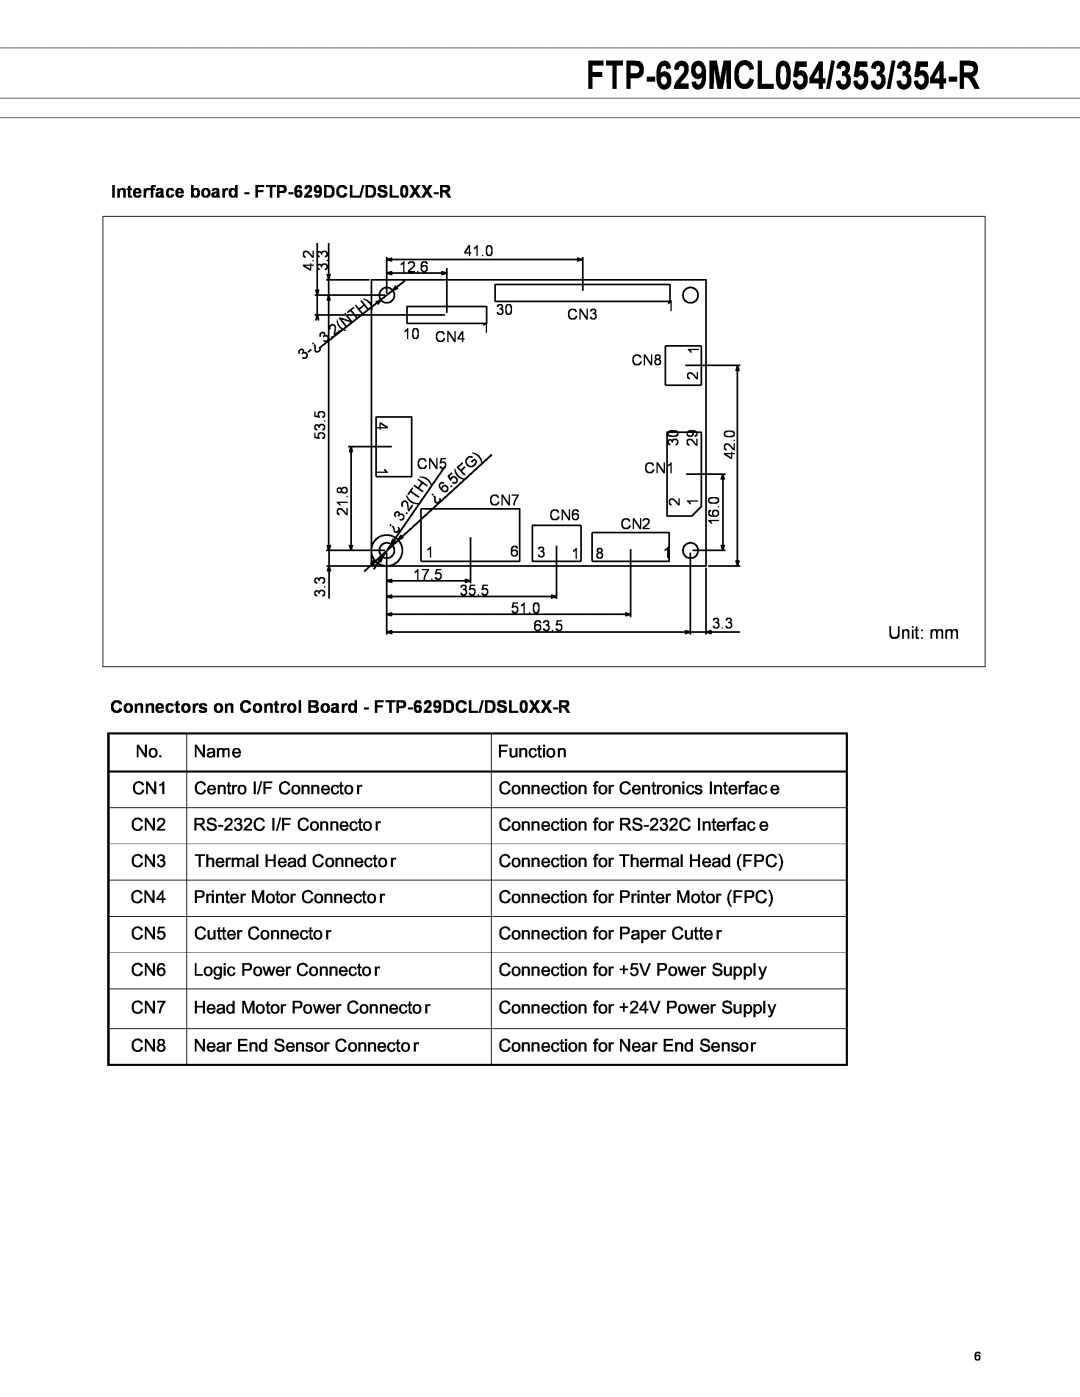 Fujitsu manual FTP-629MCL054/353/354-R, Interface board - FTP-629DCL/DSL0XX-R, 2NTH 3 -¿ 